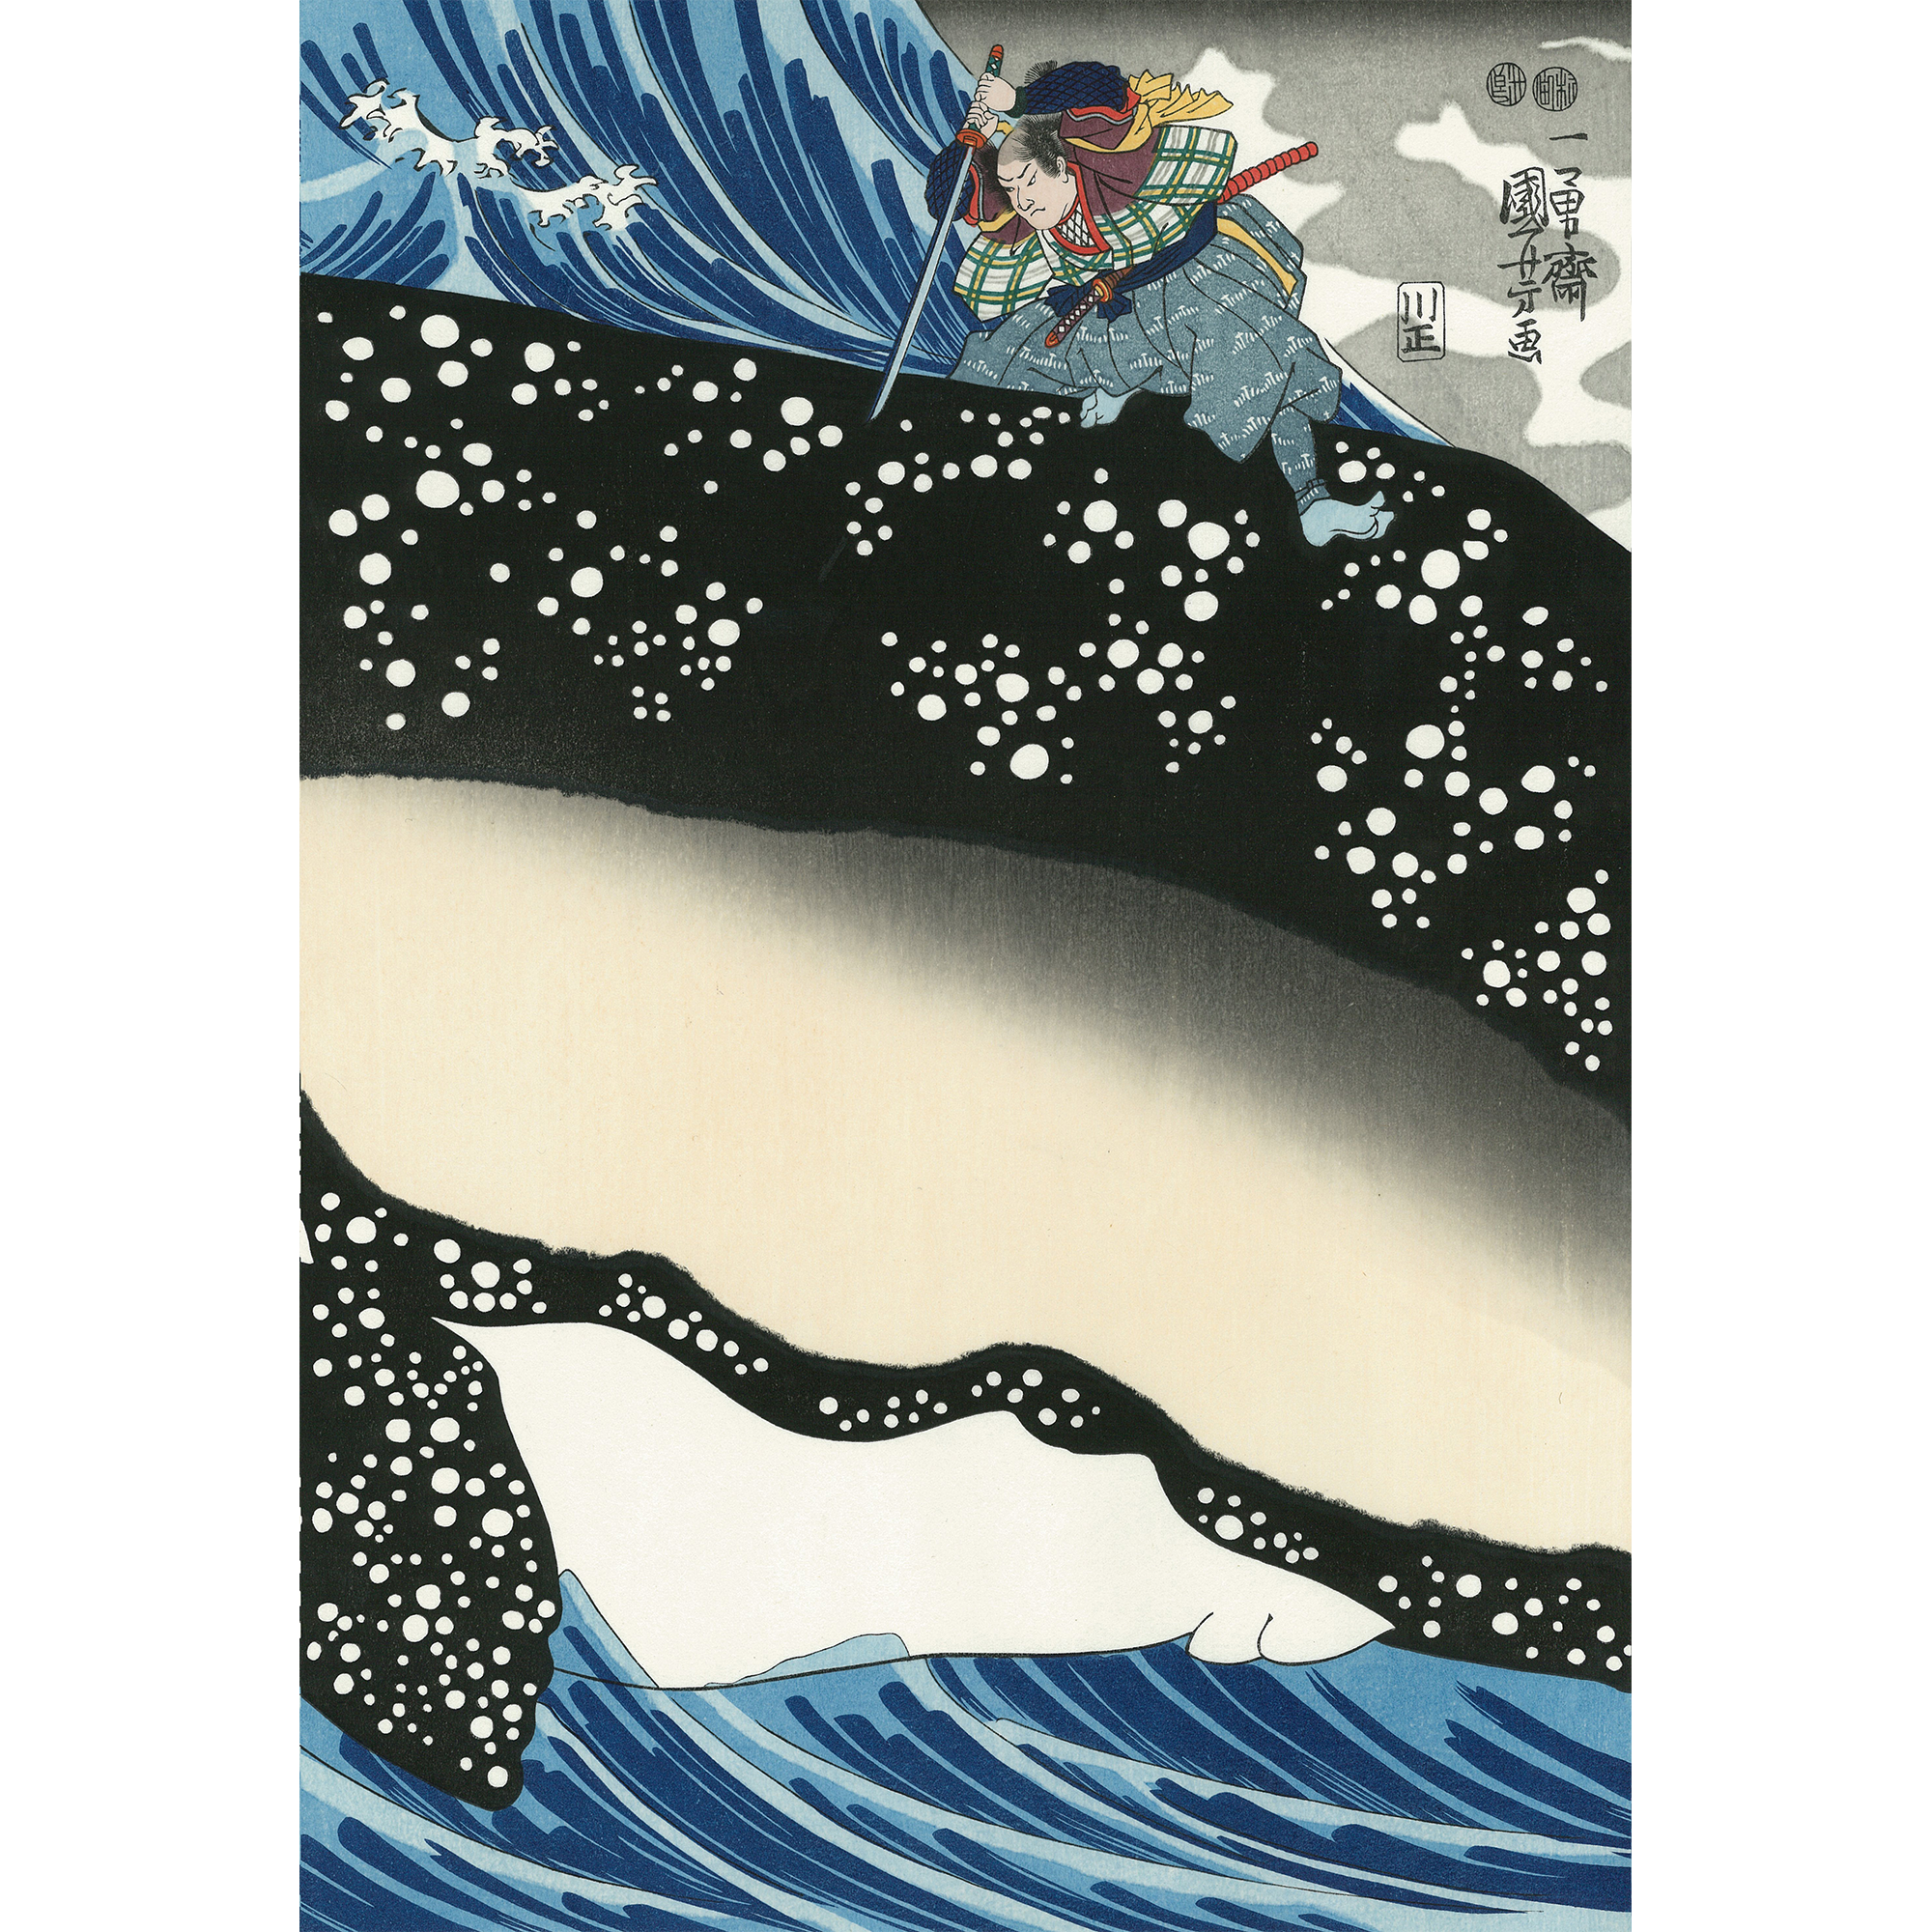 Miyamoto Musashi Subduing the Whale 